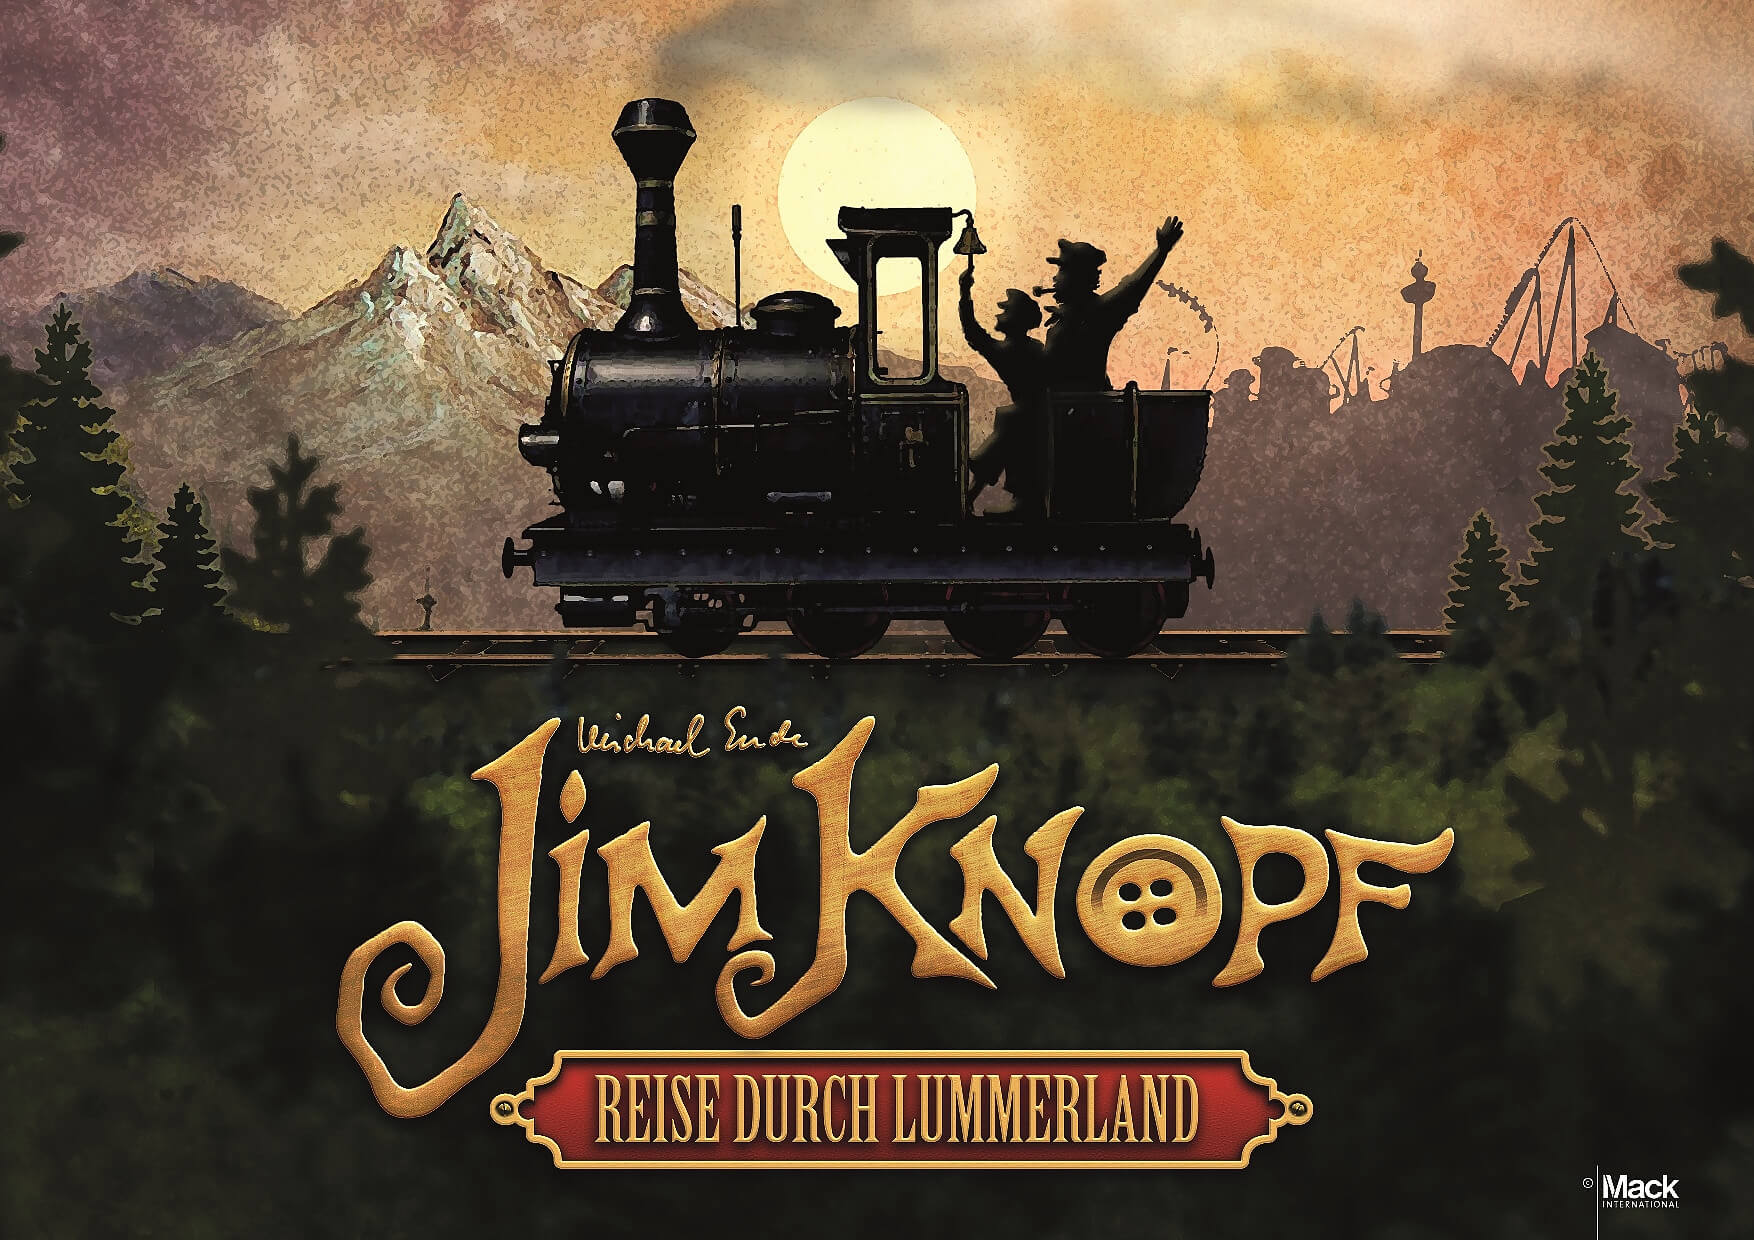 Jim Knopf Themenfahrt im Europa-Park